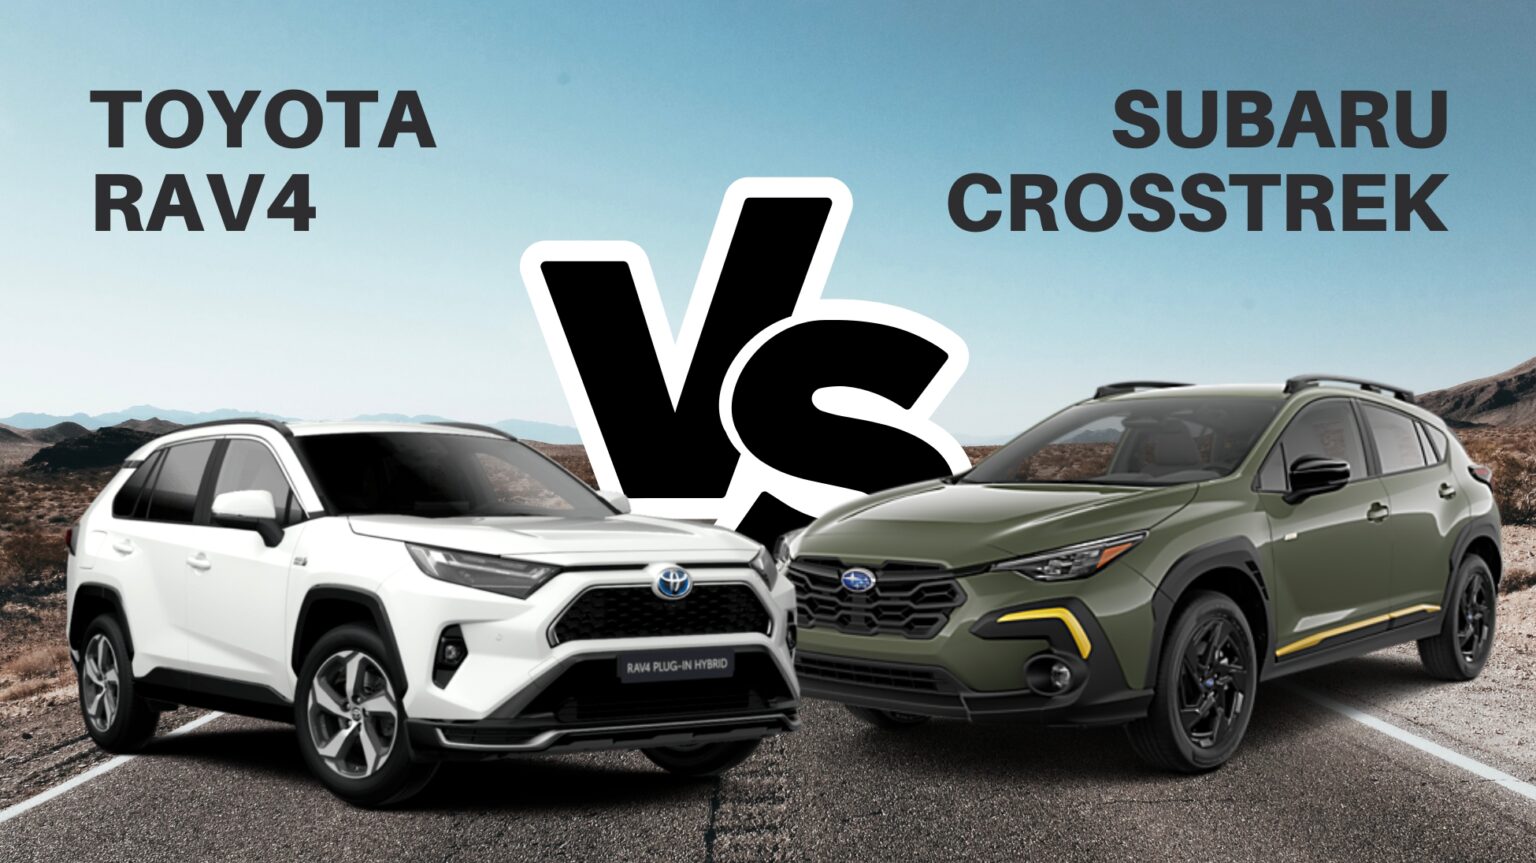 Subaru Crosstrek VS Toyota RAV4 Which One is Best for You in 2023!